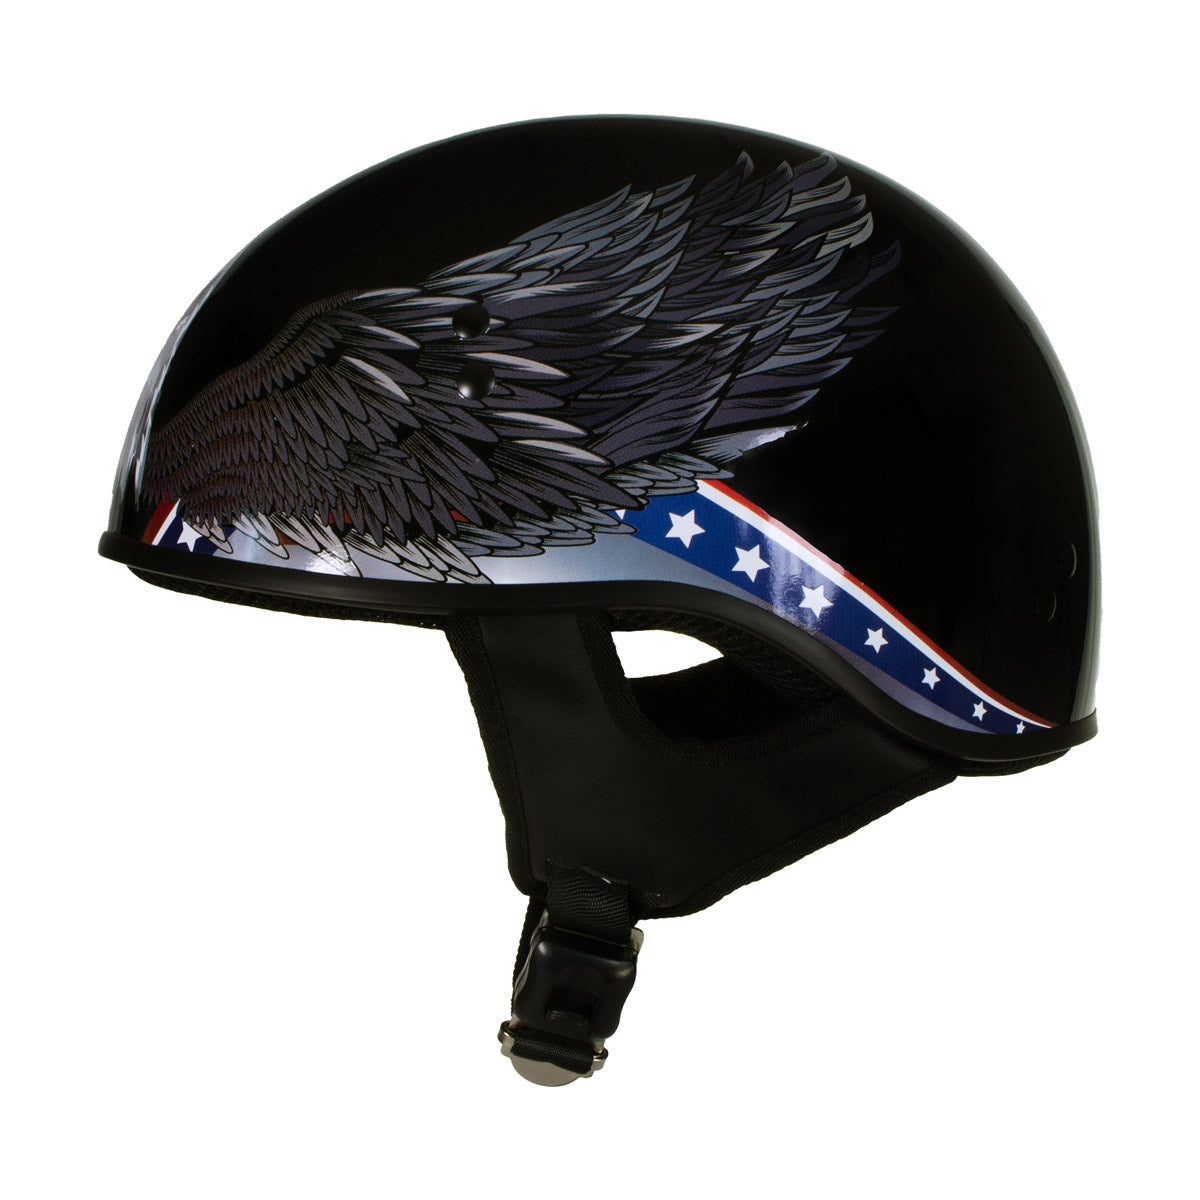 Hot Leathers T68 'Eagle' Black Advanced DOT Approved Motorcycle Skull Cap Half Helmet for Men and Women Biker